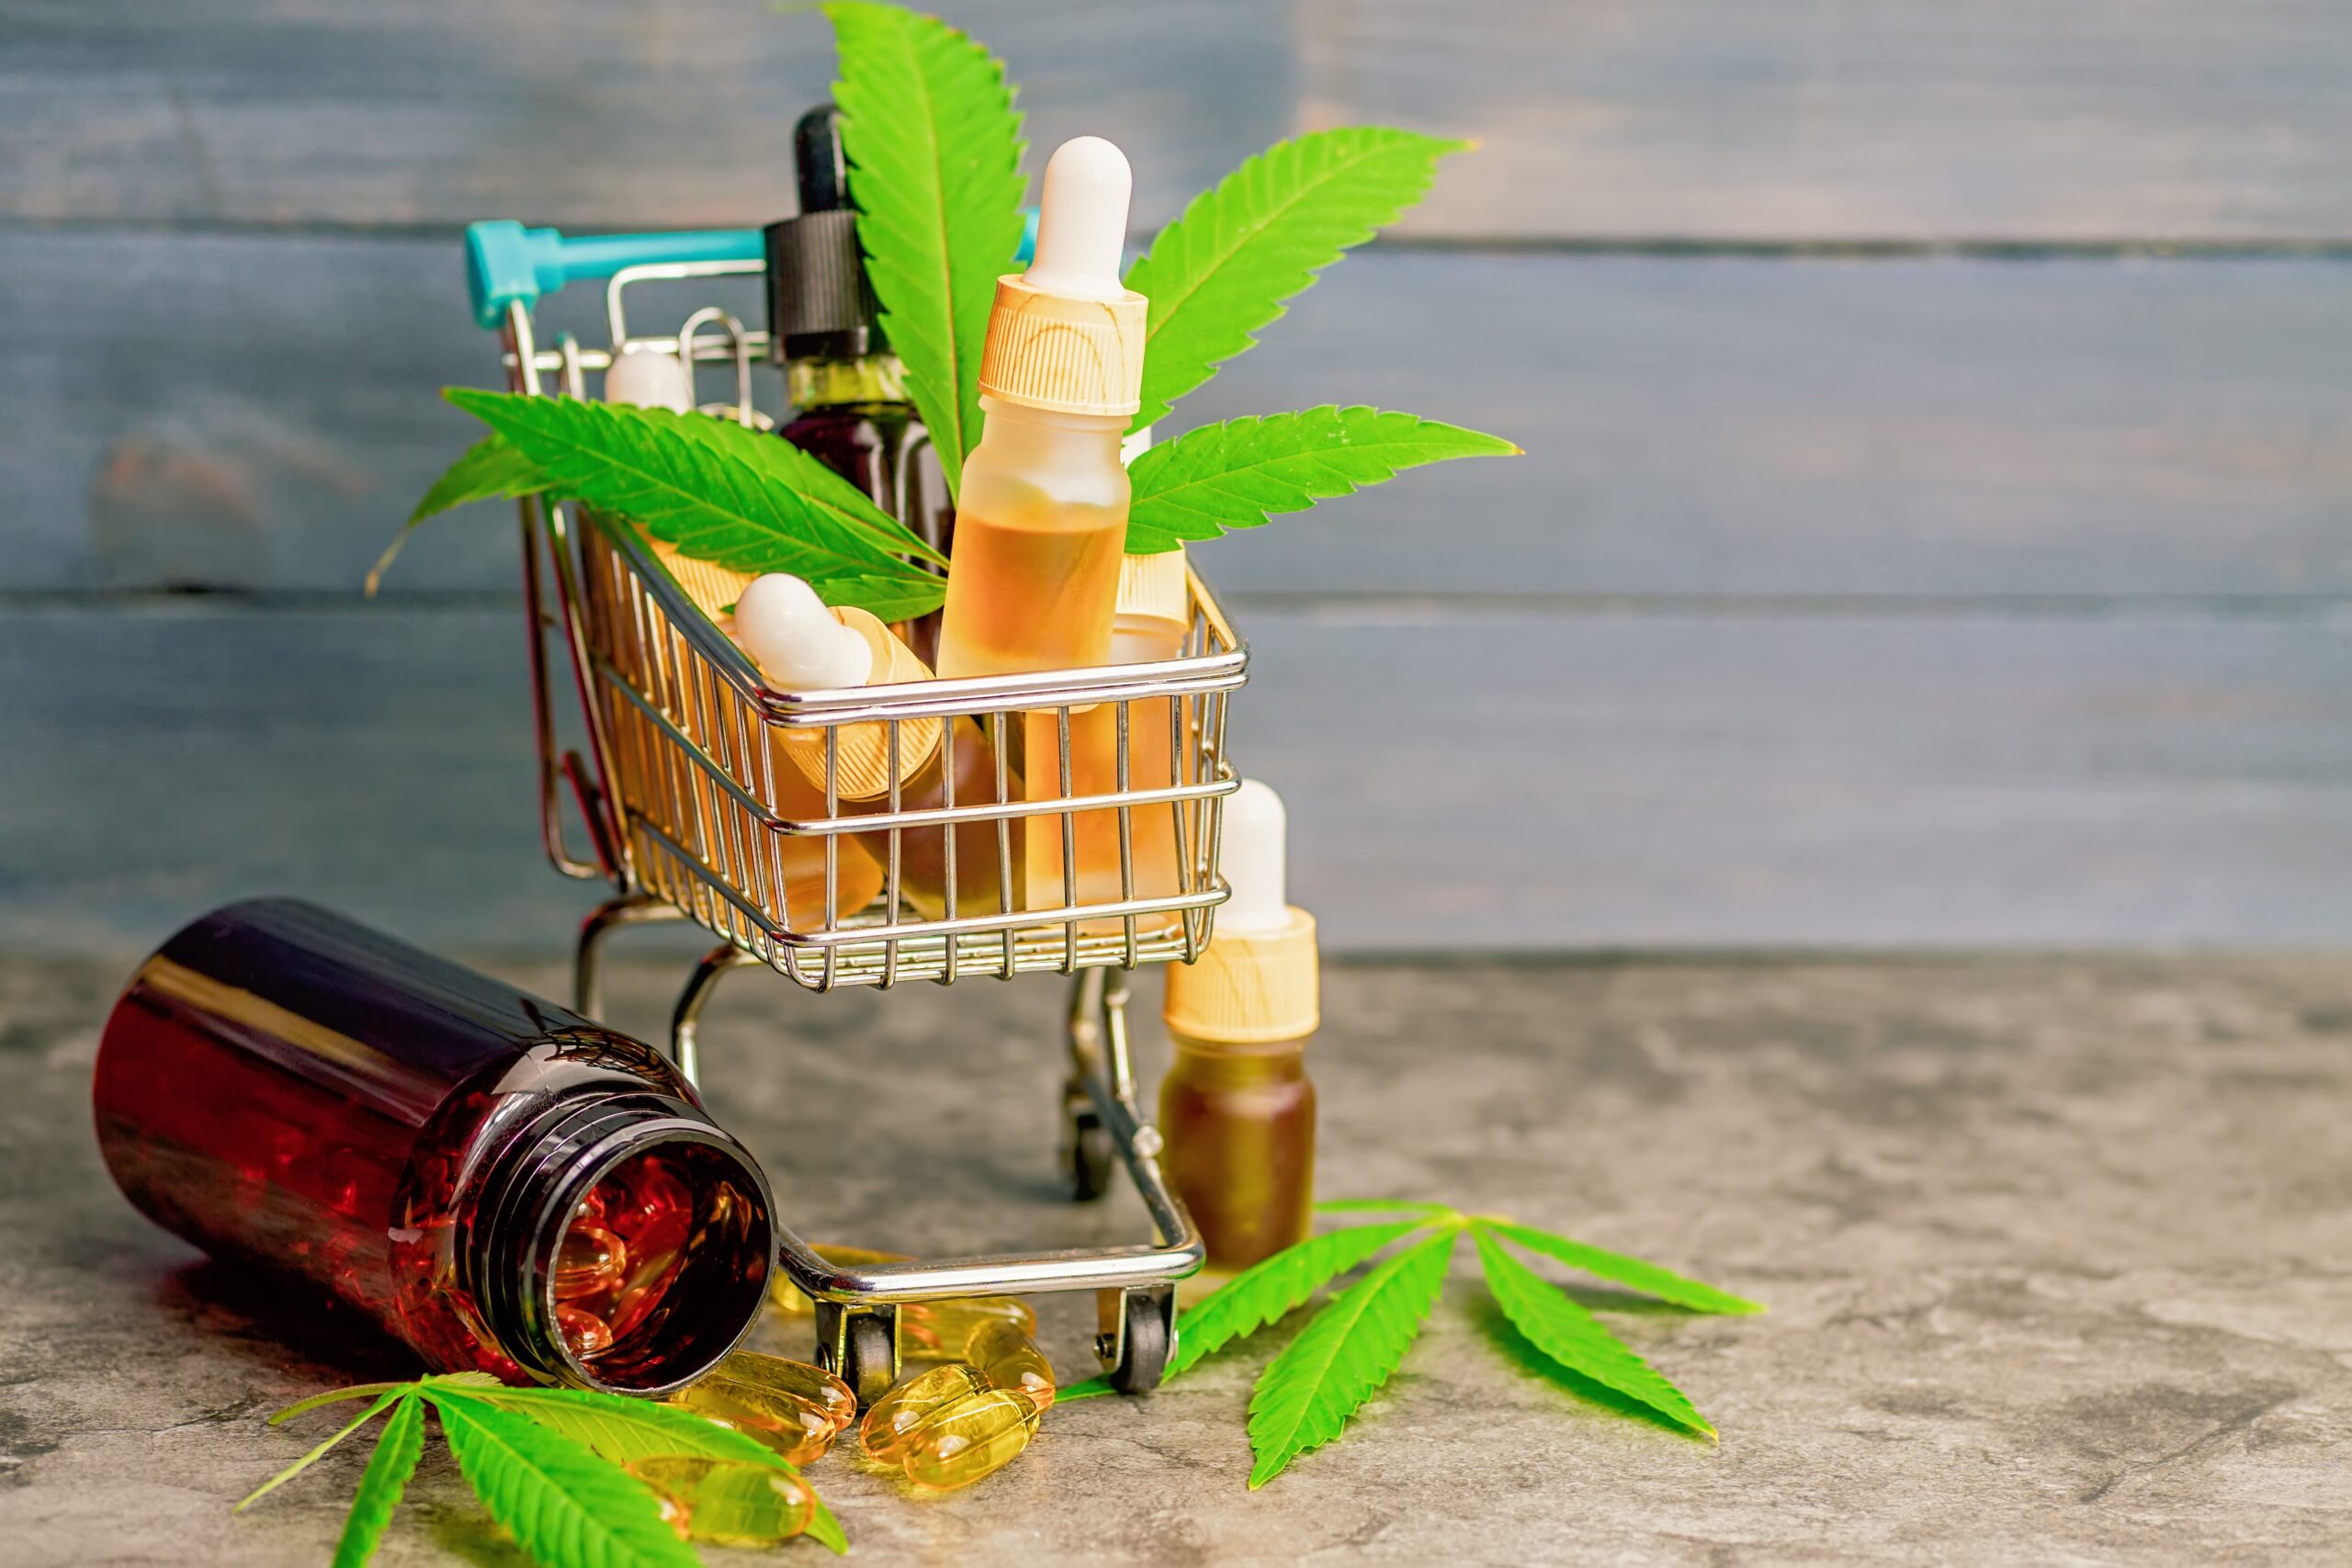 supermarket-trolley-basket-with-cannabis-cbd-oils-2022-11-15-11-15-45-utc